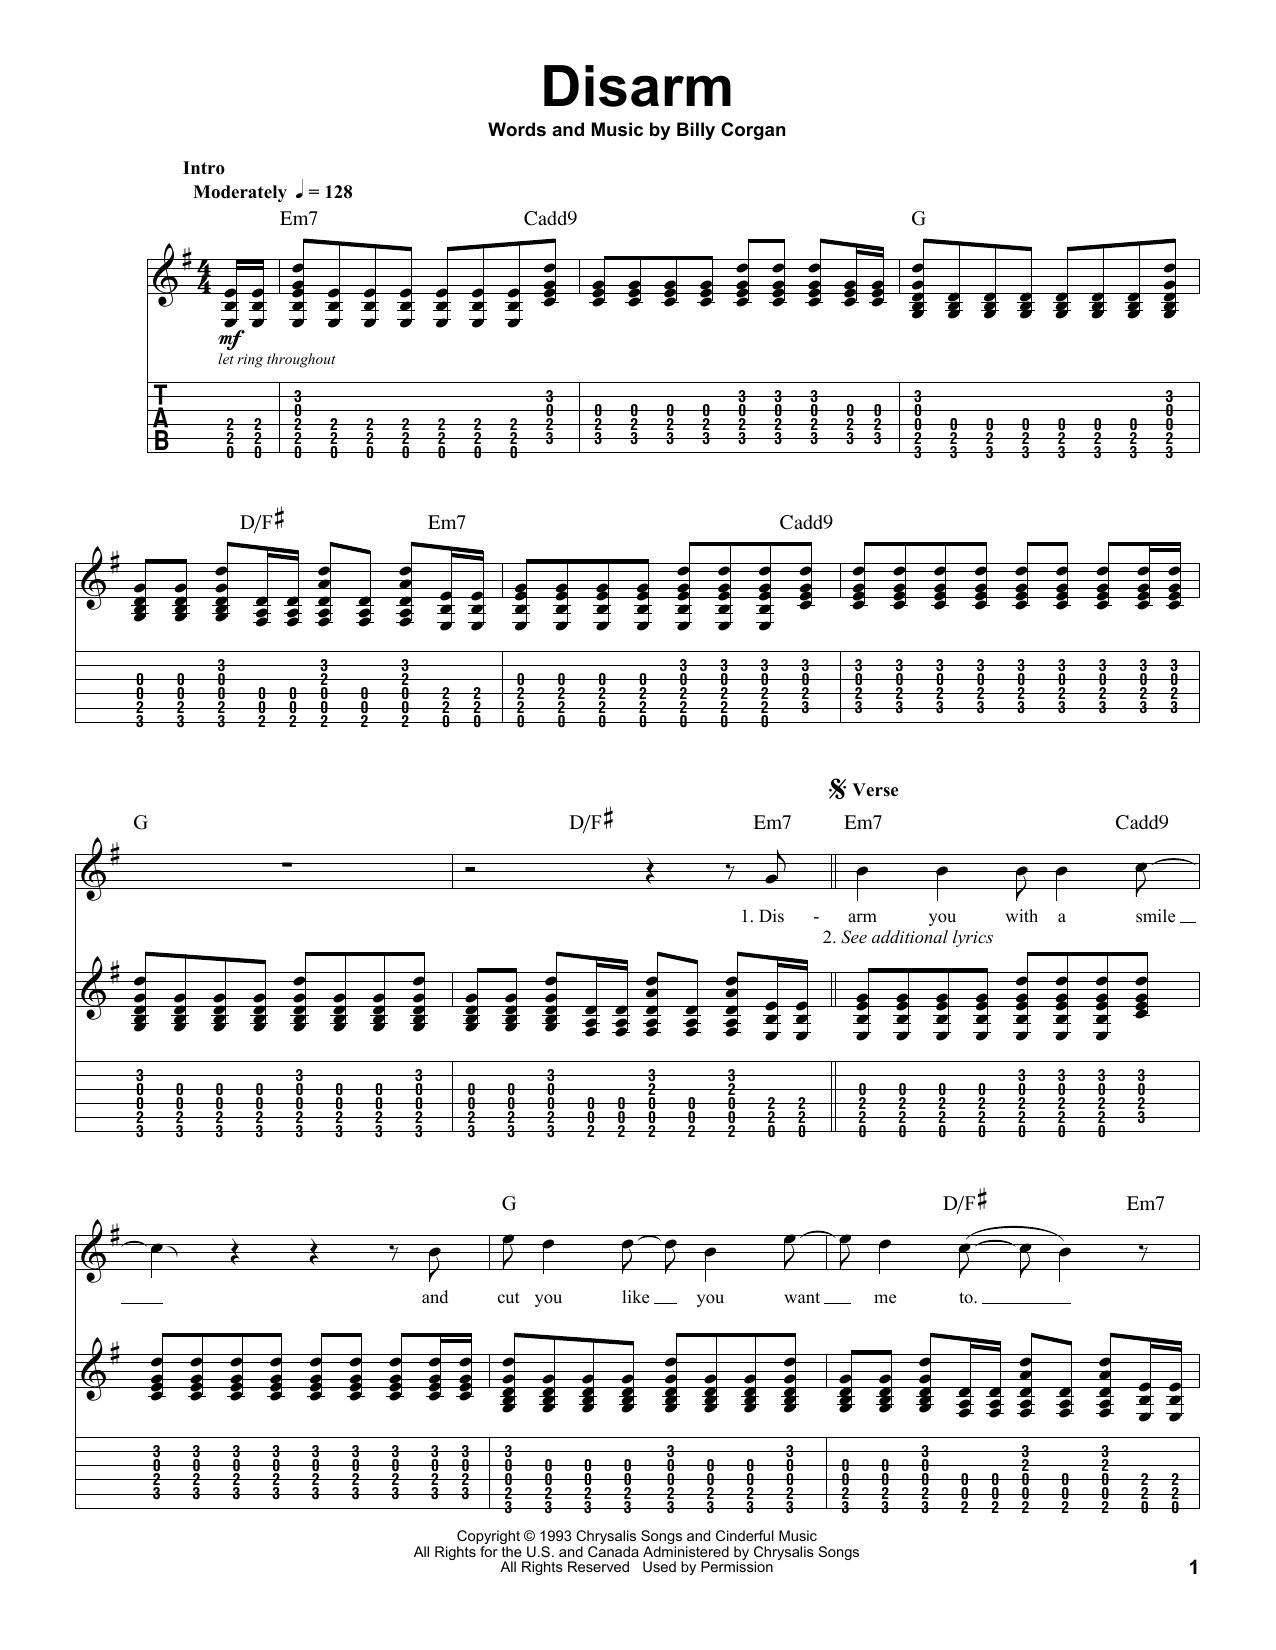 Smashing Pumpkins Disarm Sheet Music Notes & Chords for Guitar Tab (Single Guitar) - Download or Print PDF